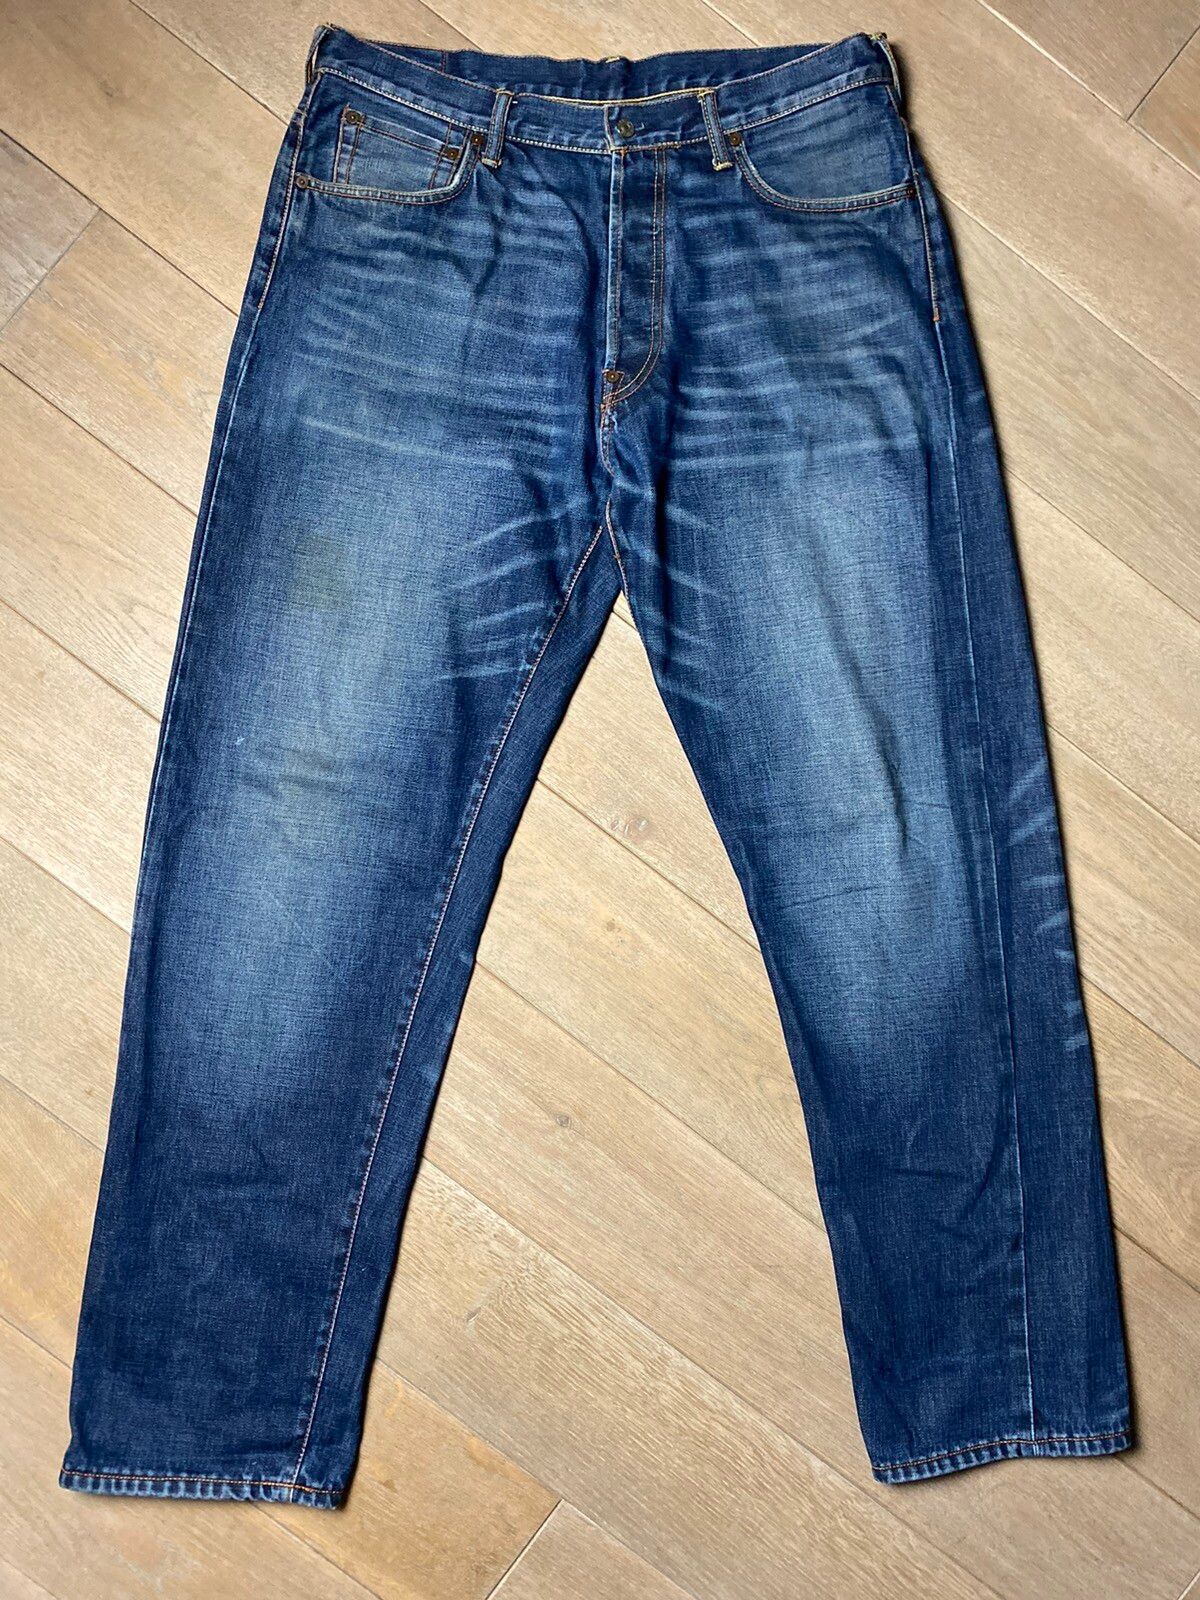 Vintage Evisu Japan vintage blue jeans denim pants big seagull logo Size US 38 / EU 54 - 8 Thumbnail